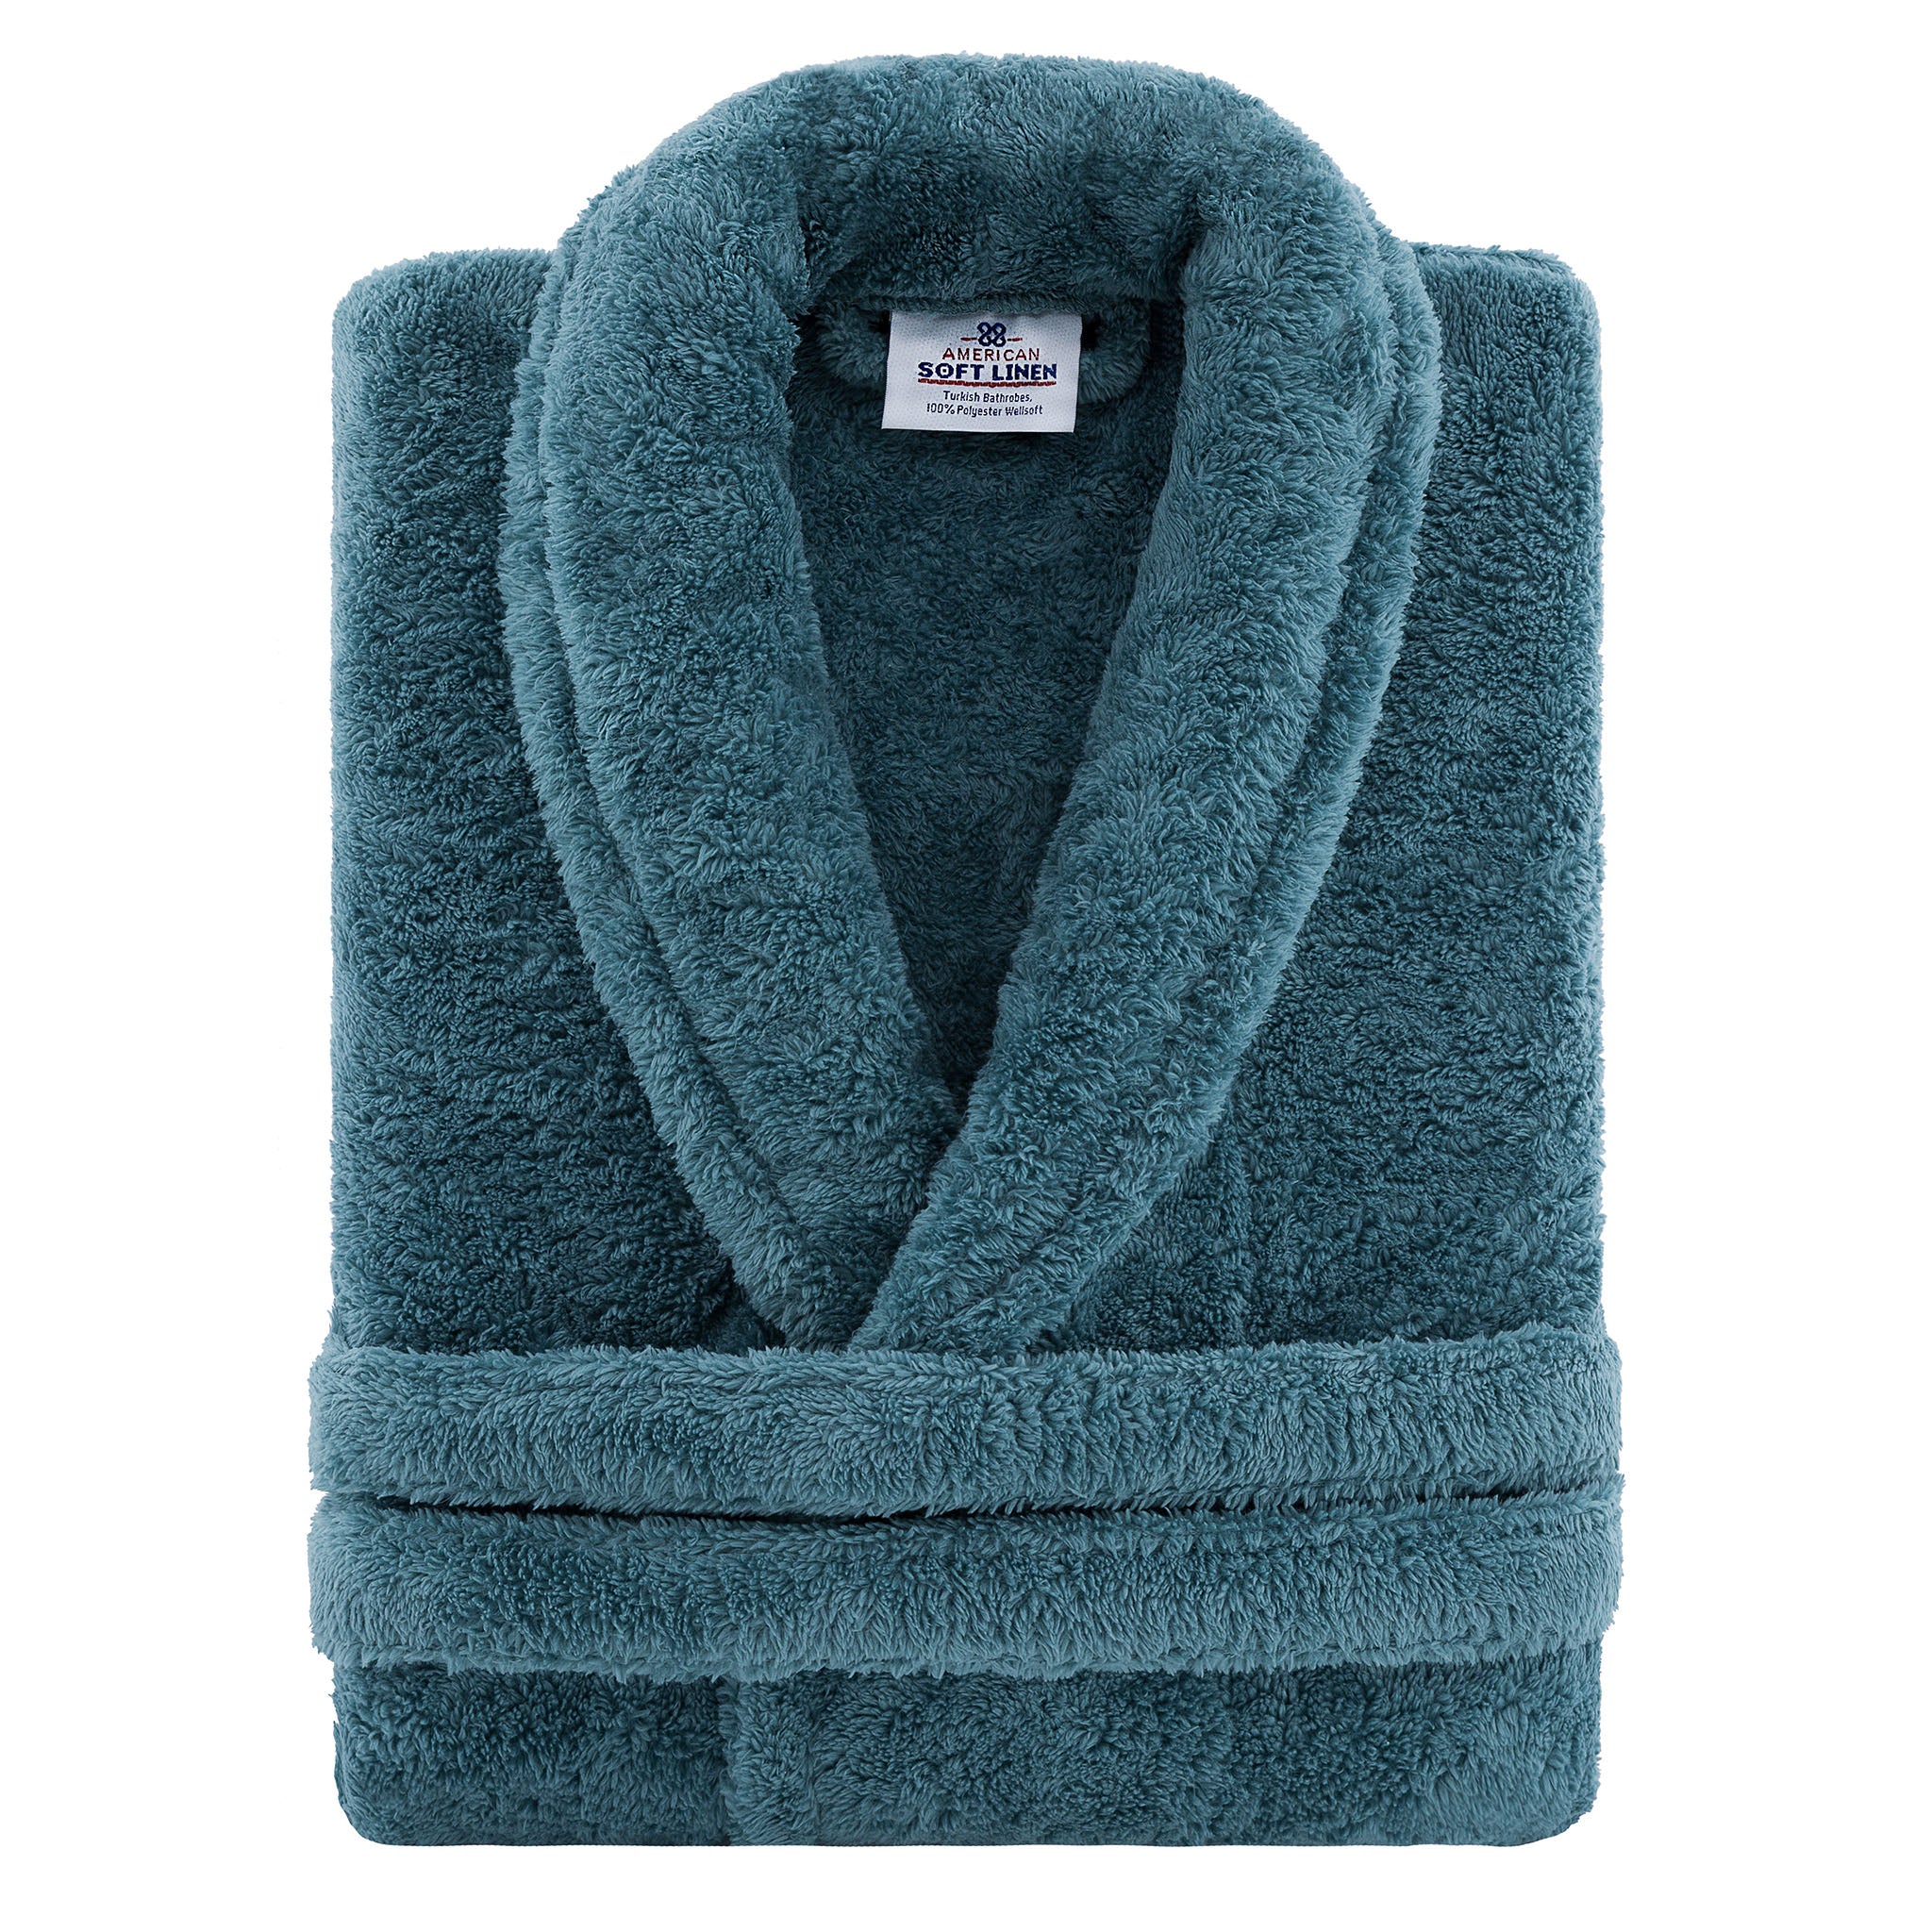 American Soft Linen Super Soft, Absorbent and Fluffy, Unisex Fleece Bathrobe S-M-colonial-blue-3